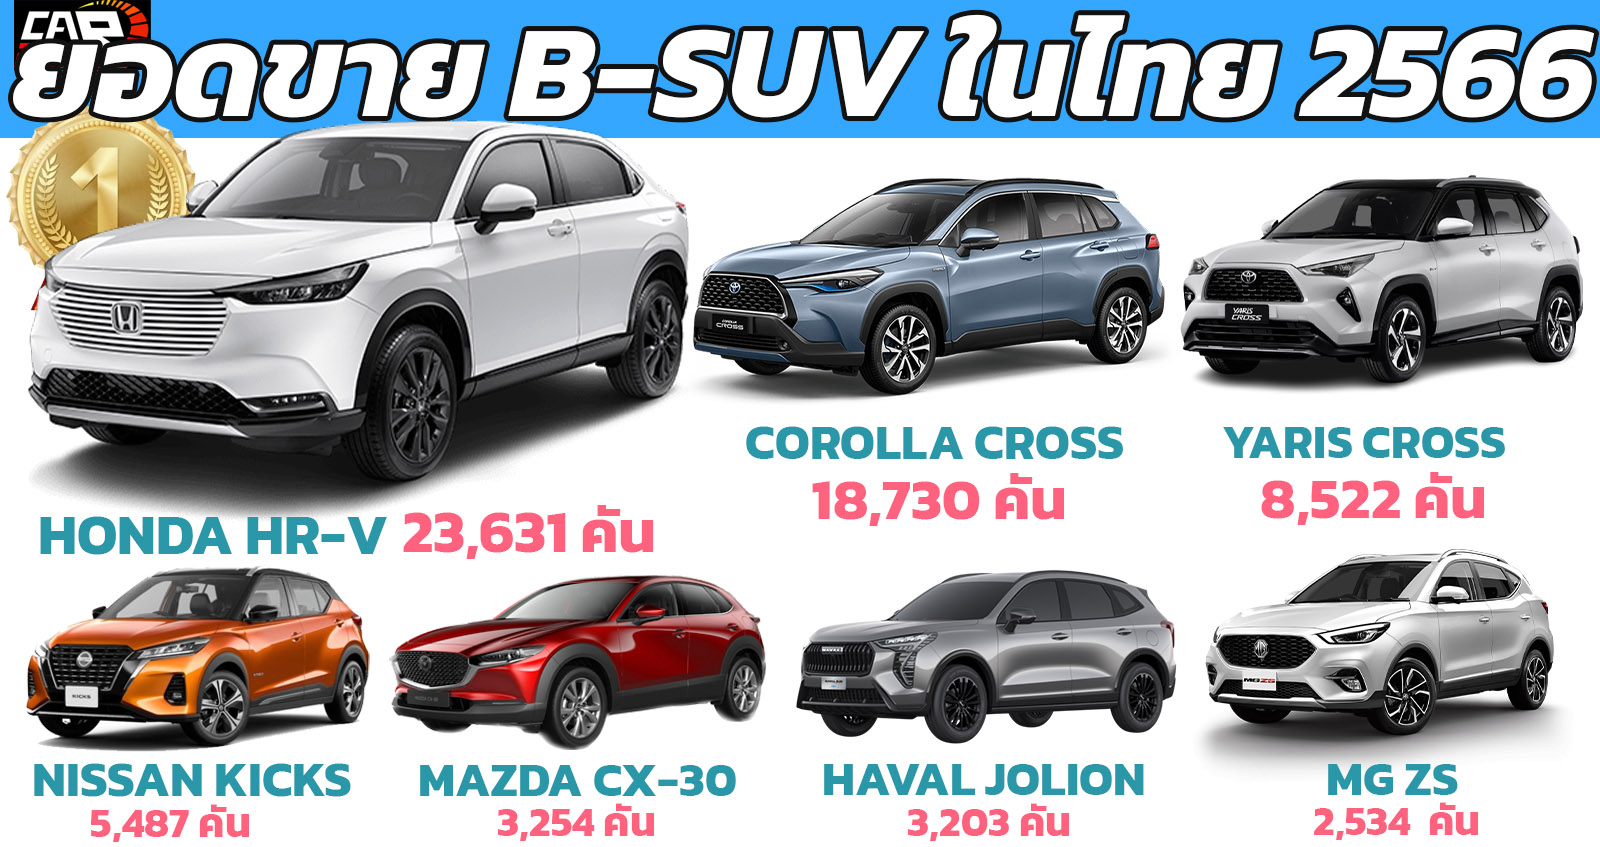 HONDA HR-V นำยอดขายรถยนต์ กลุ่ม B-SUV ในไทย ประจำปี 2566